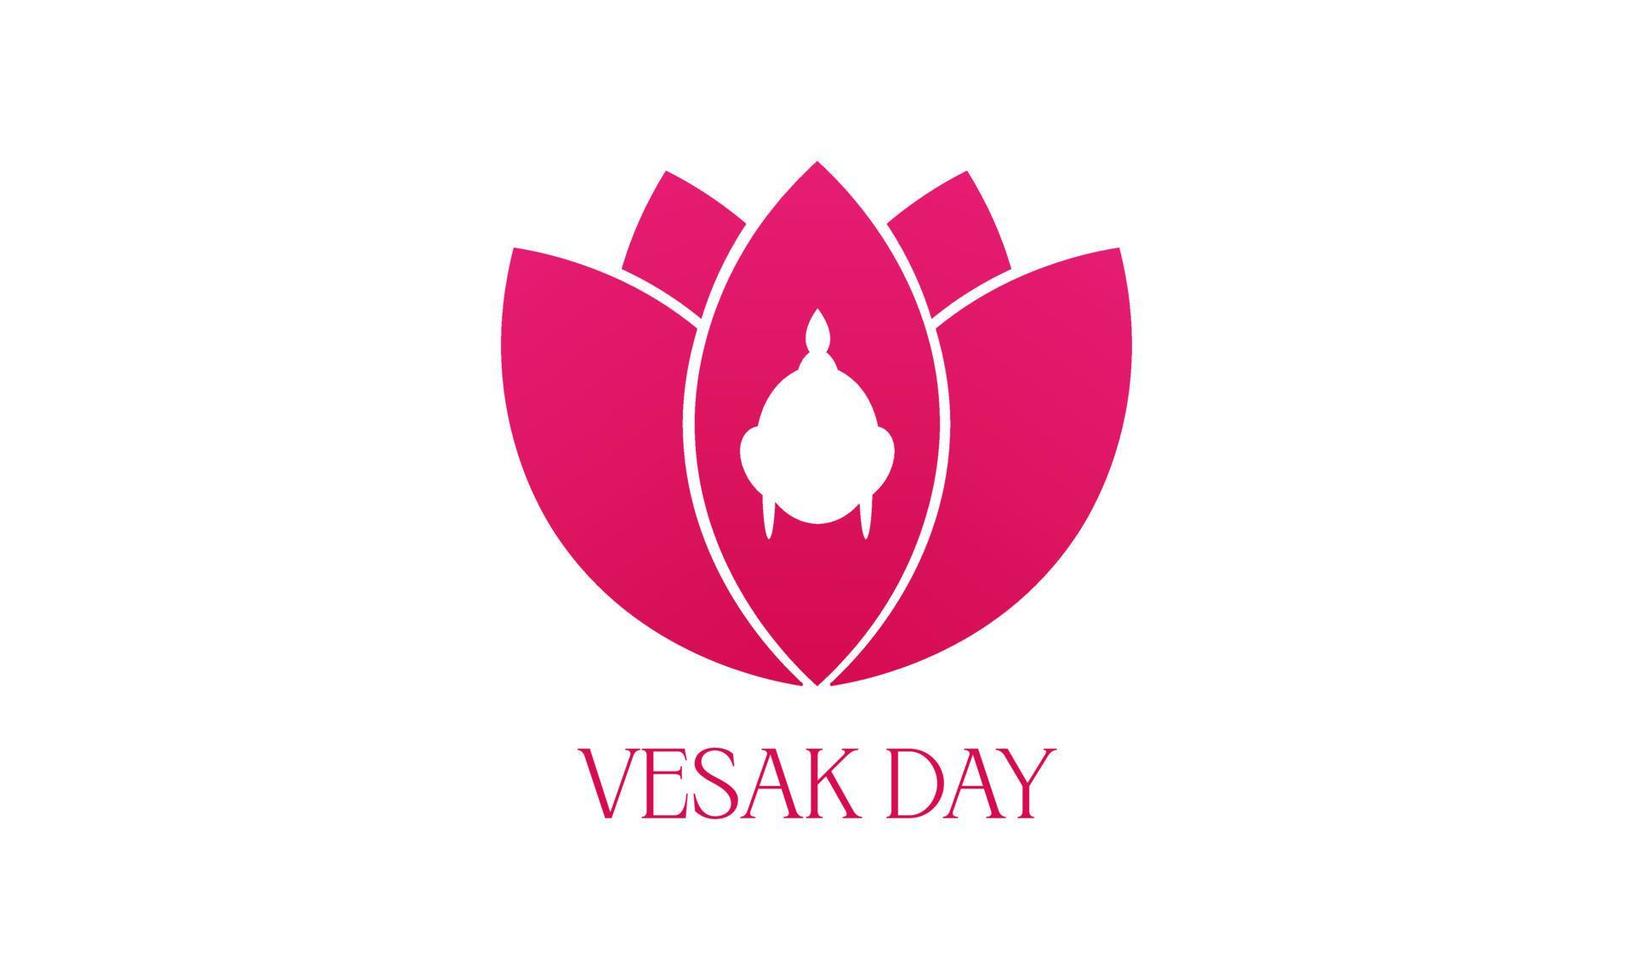 Happy vesak day or buddha purnima logo design vector